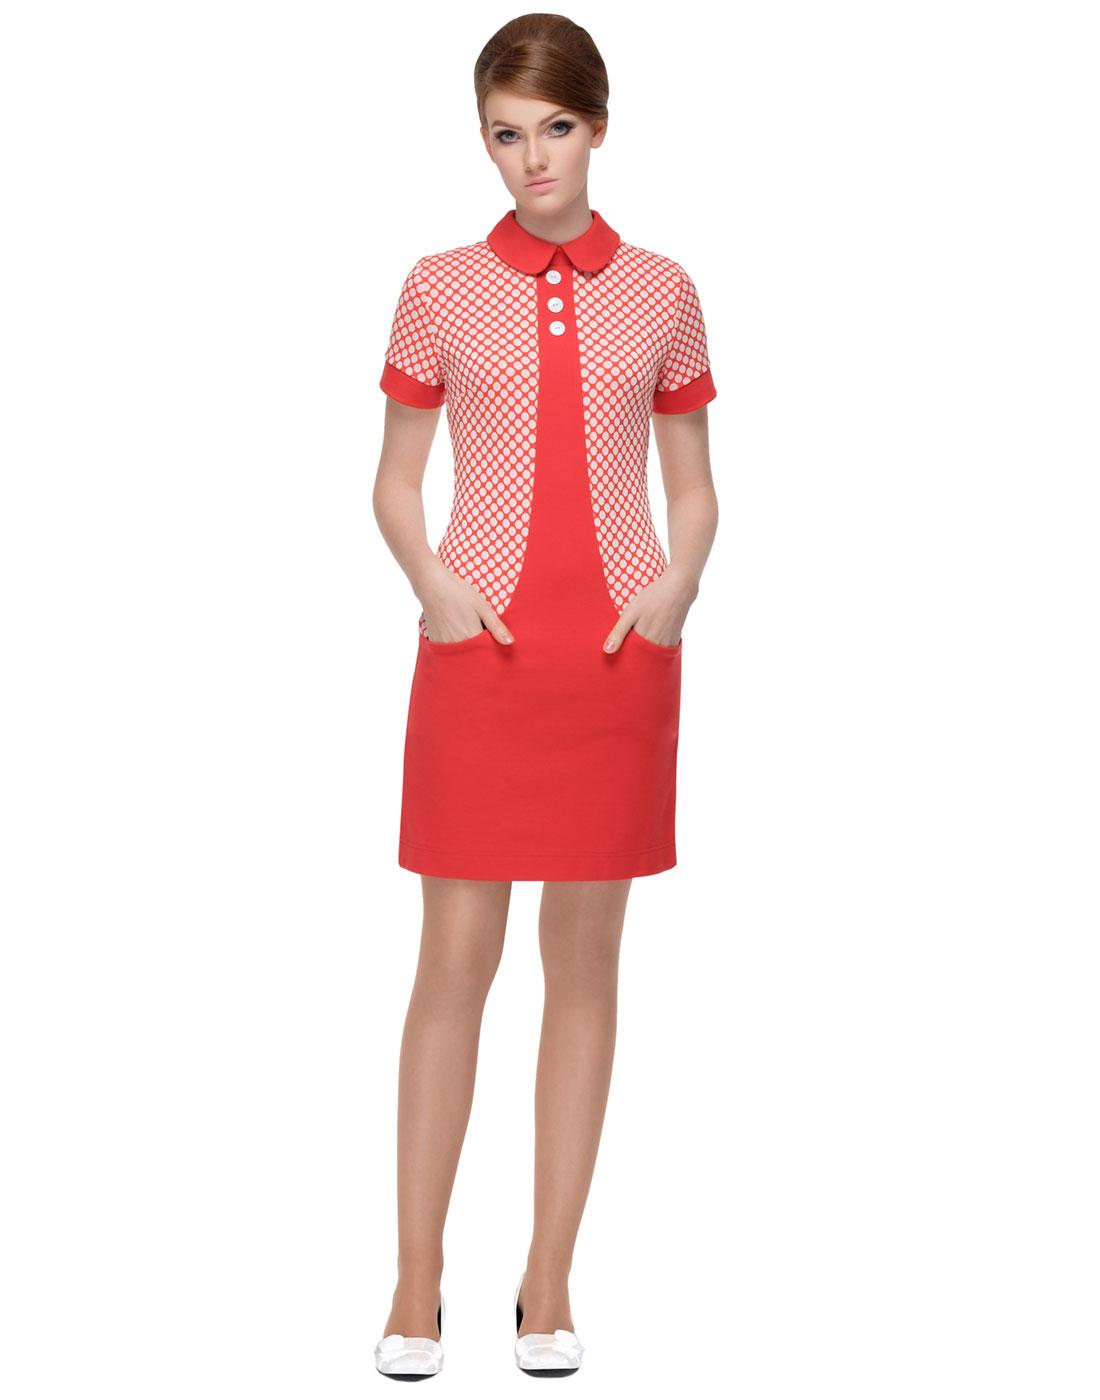 MARMALADE Retro 60s Mod Polka Dot Pocket Dress in Red